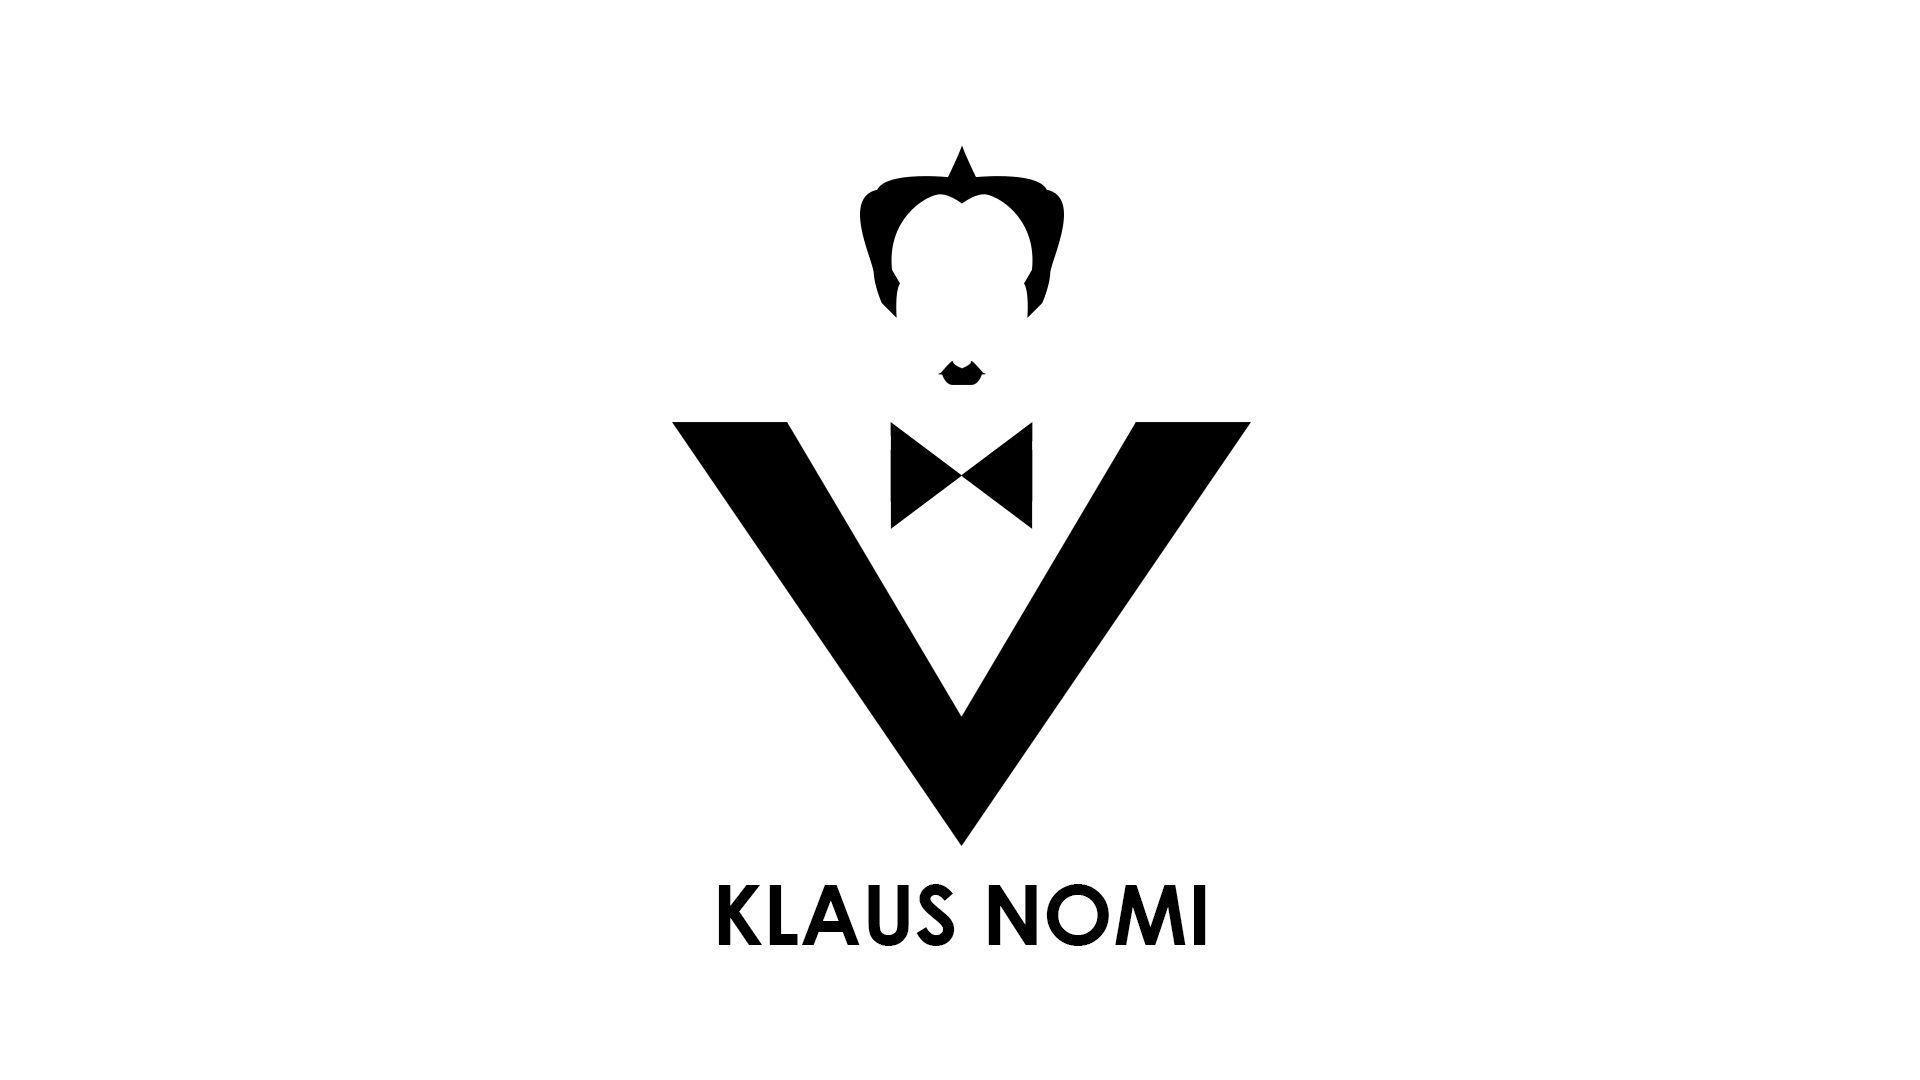 General 1920x1080 klaus nomi music opera dark logo gothic minimalism simple background white background singer